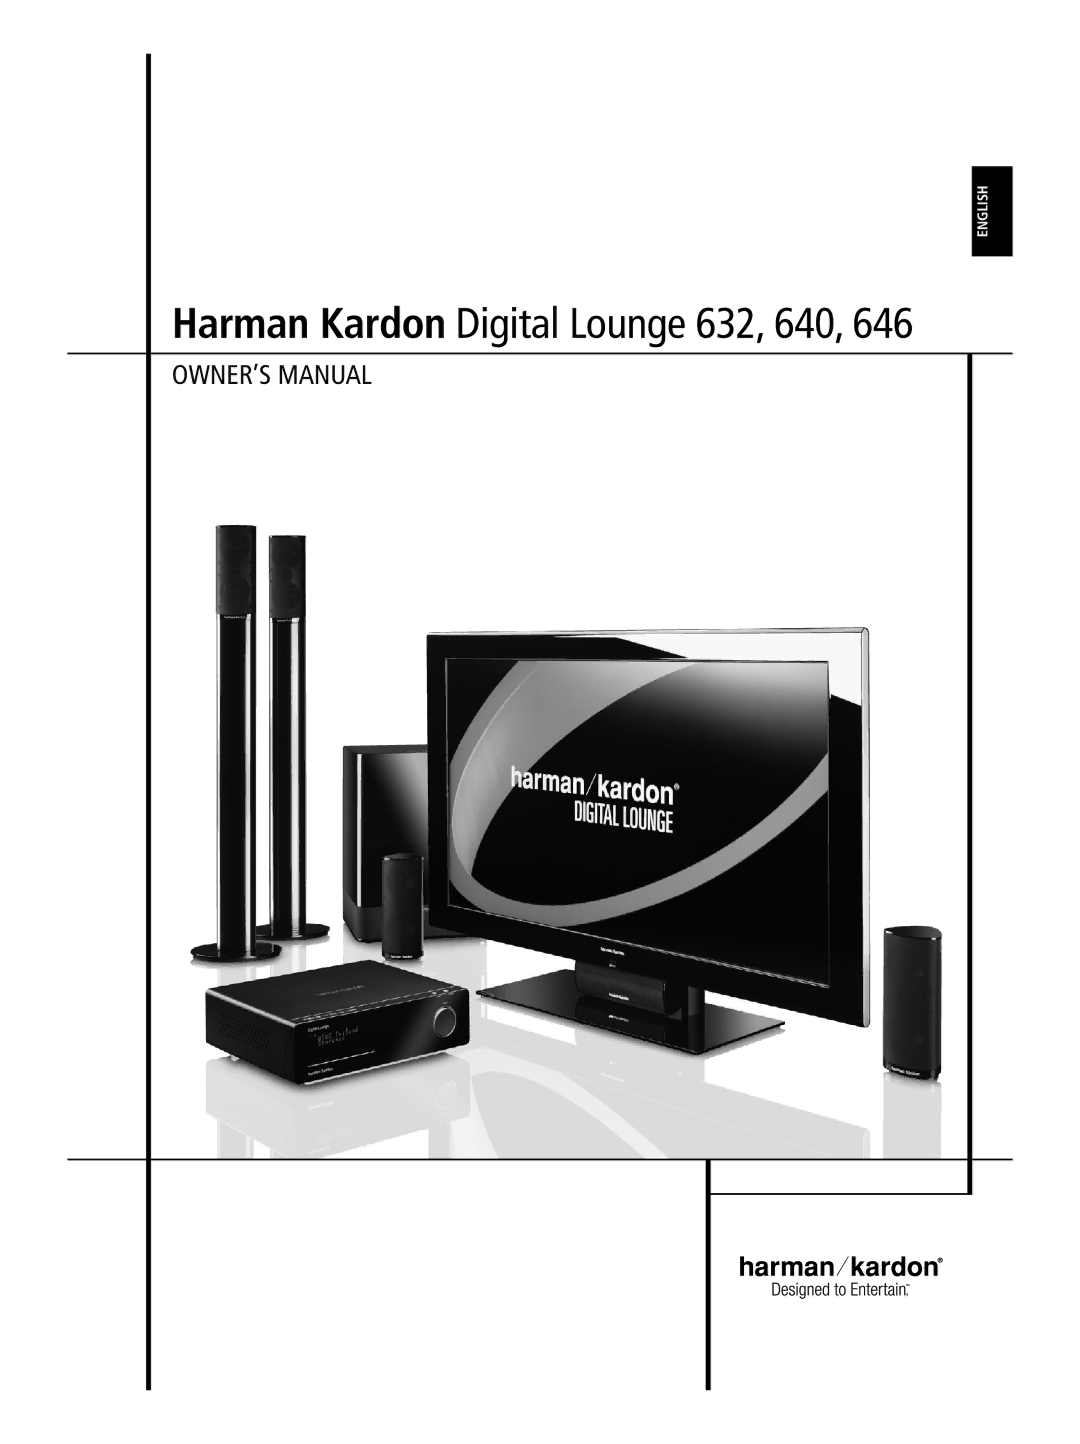 Harman-Kardon 646 owner manual Harman Kardon Digital Lounge 632, 640 